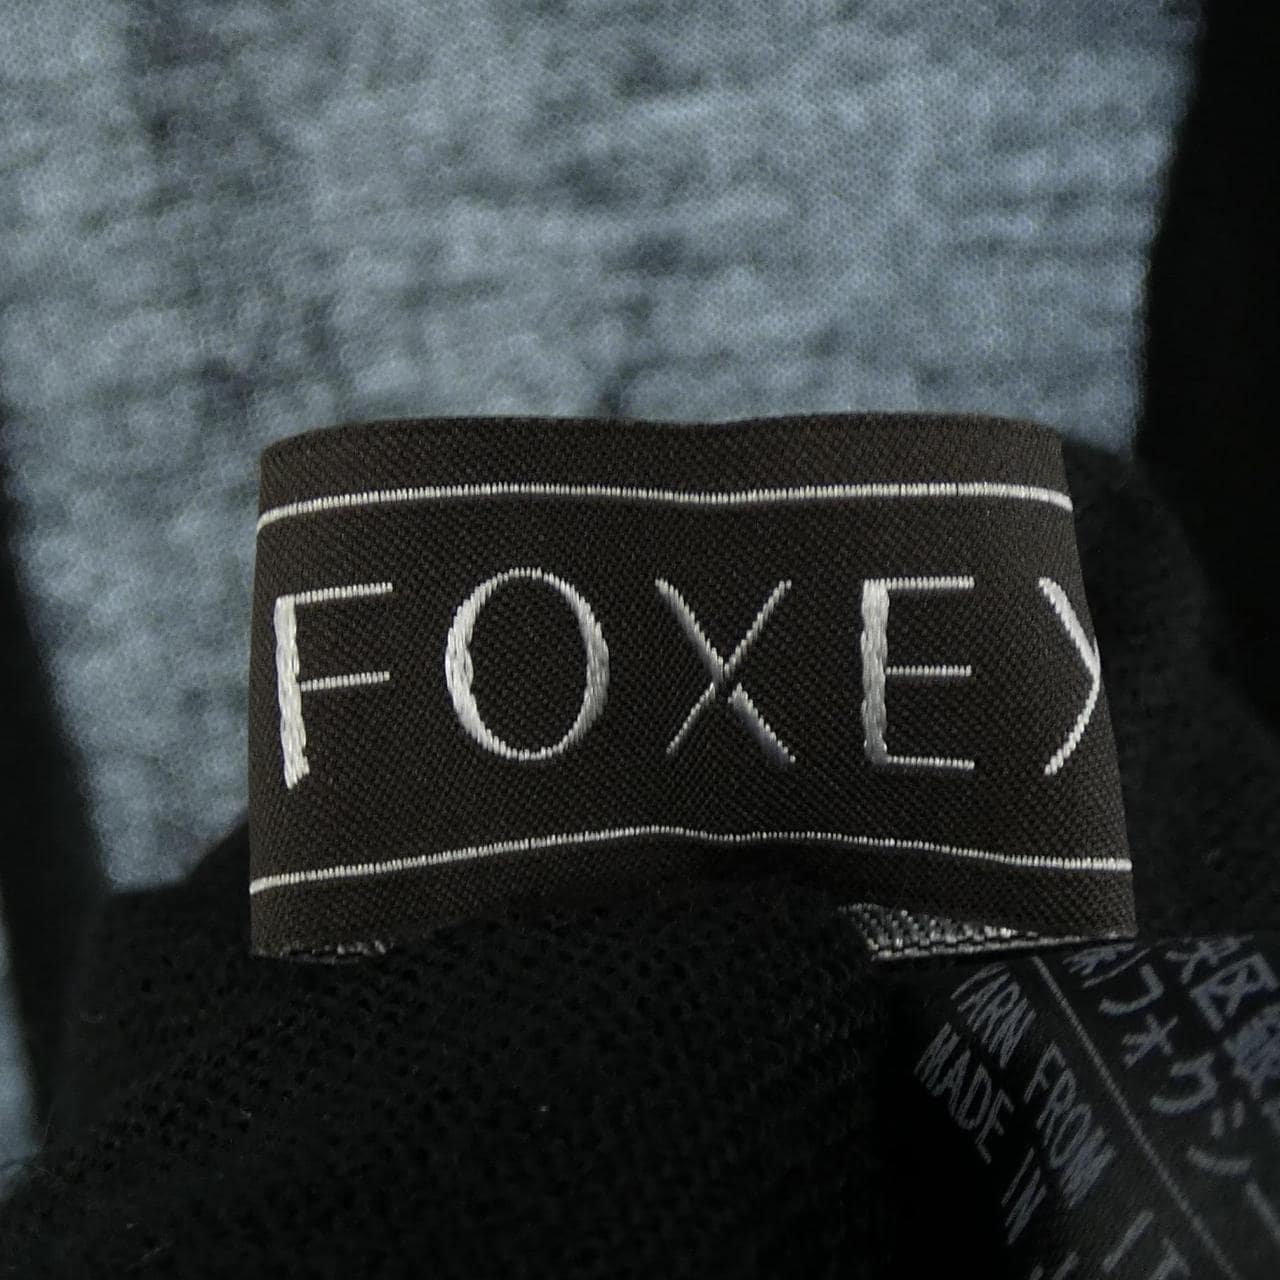 Foxy FOXEY cardigan